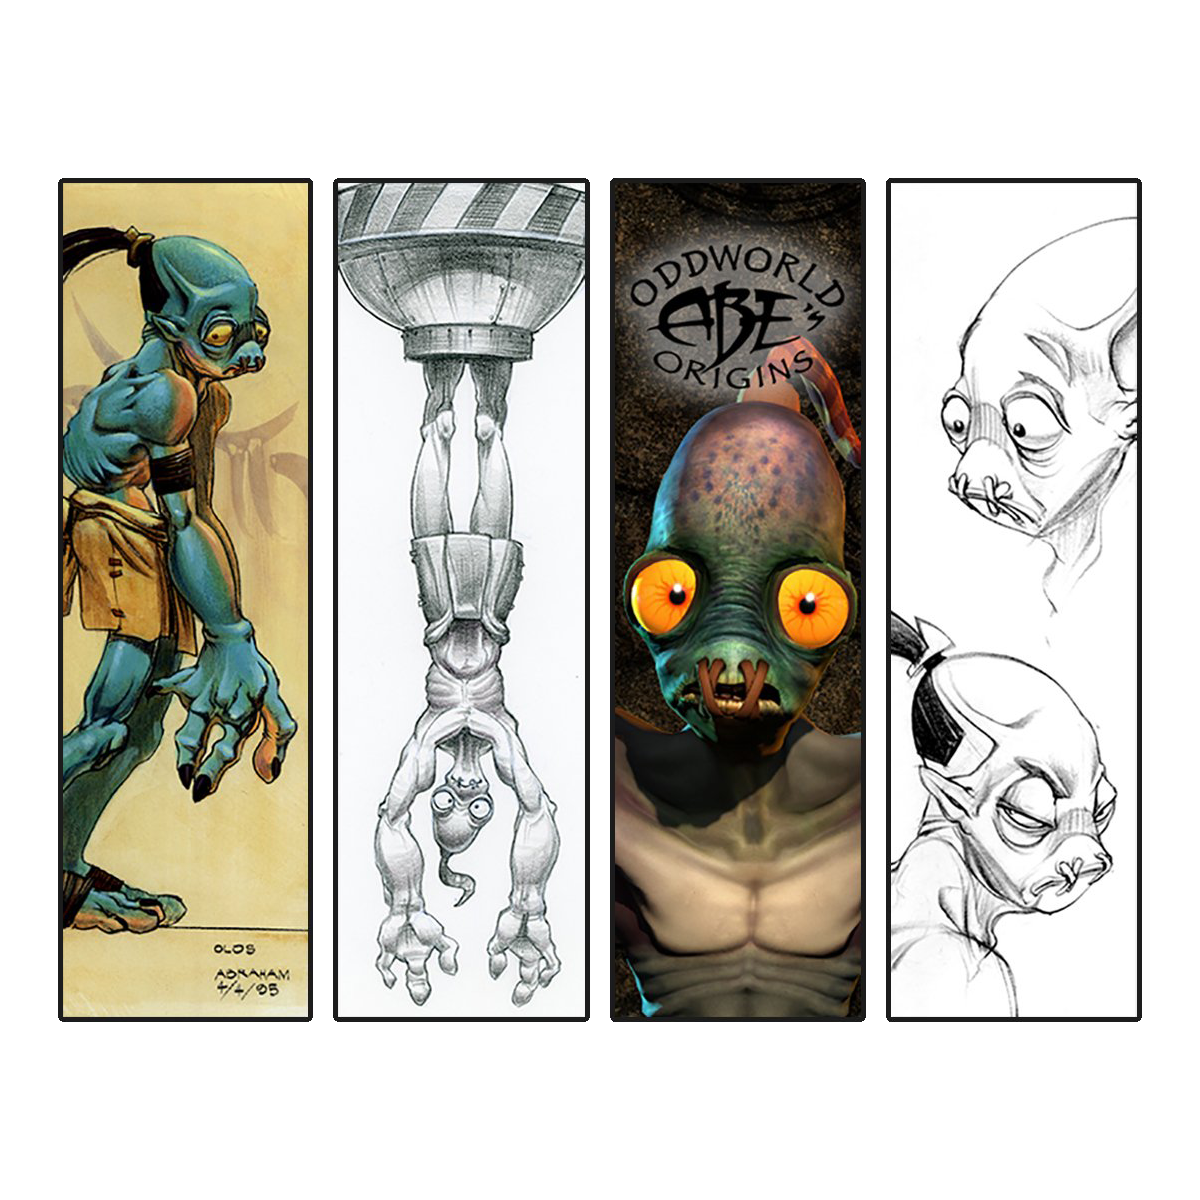 Oddworld: Abe's Origins Bookmarks - Abe Set